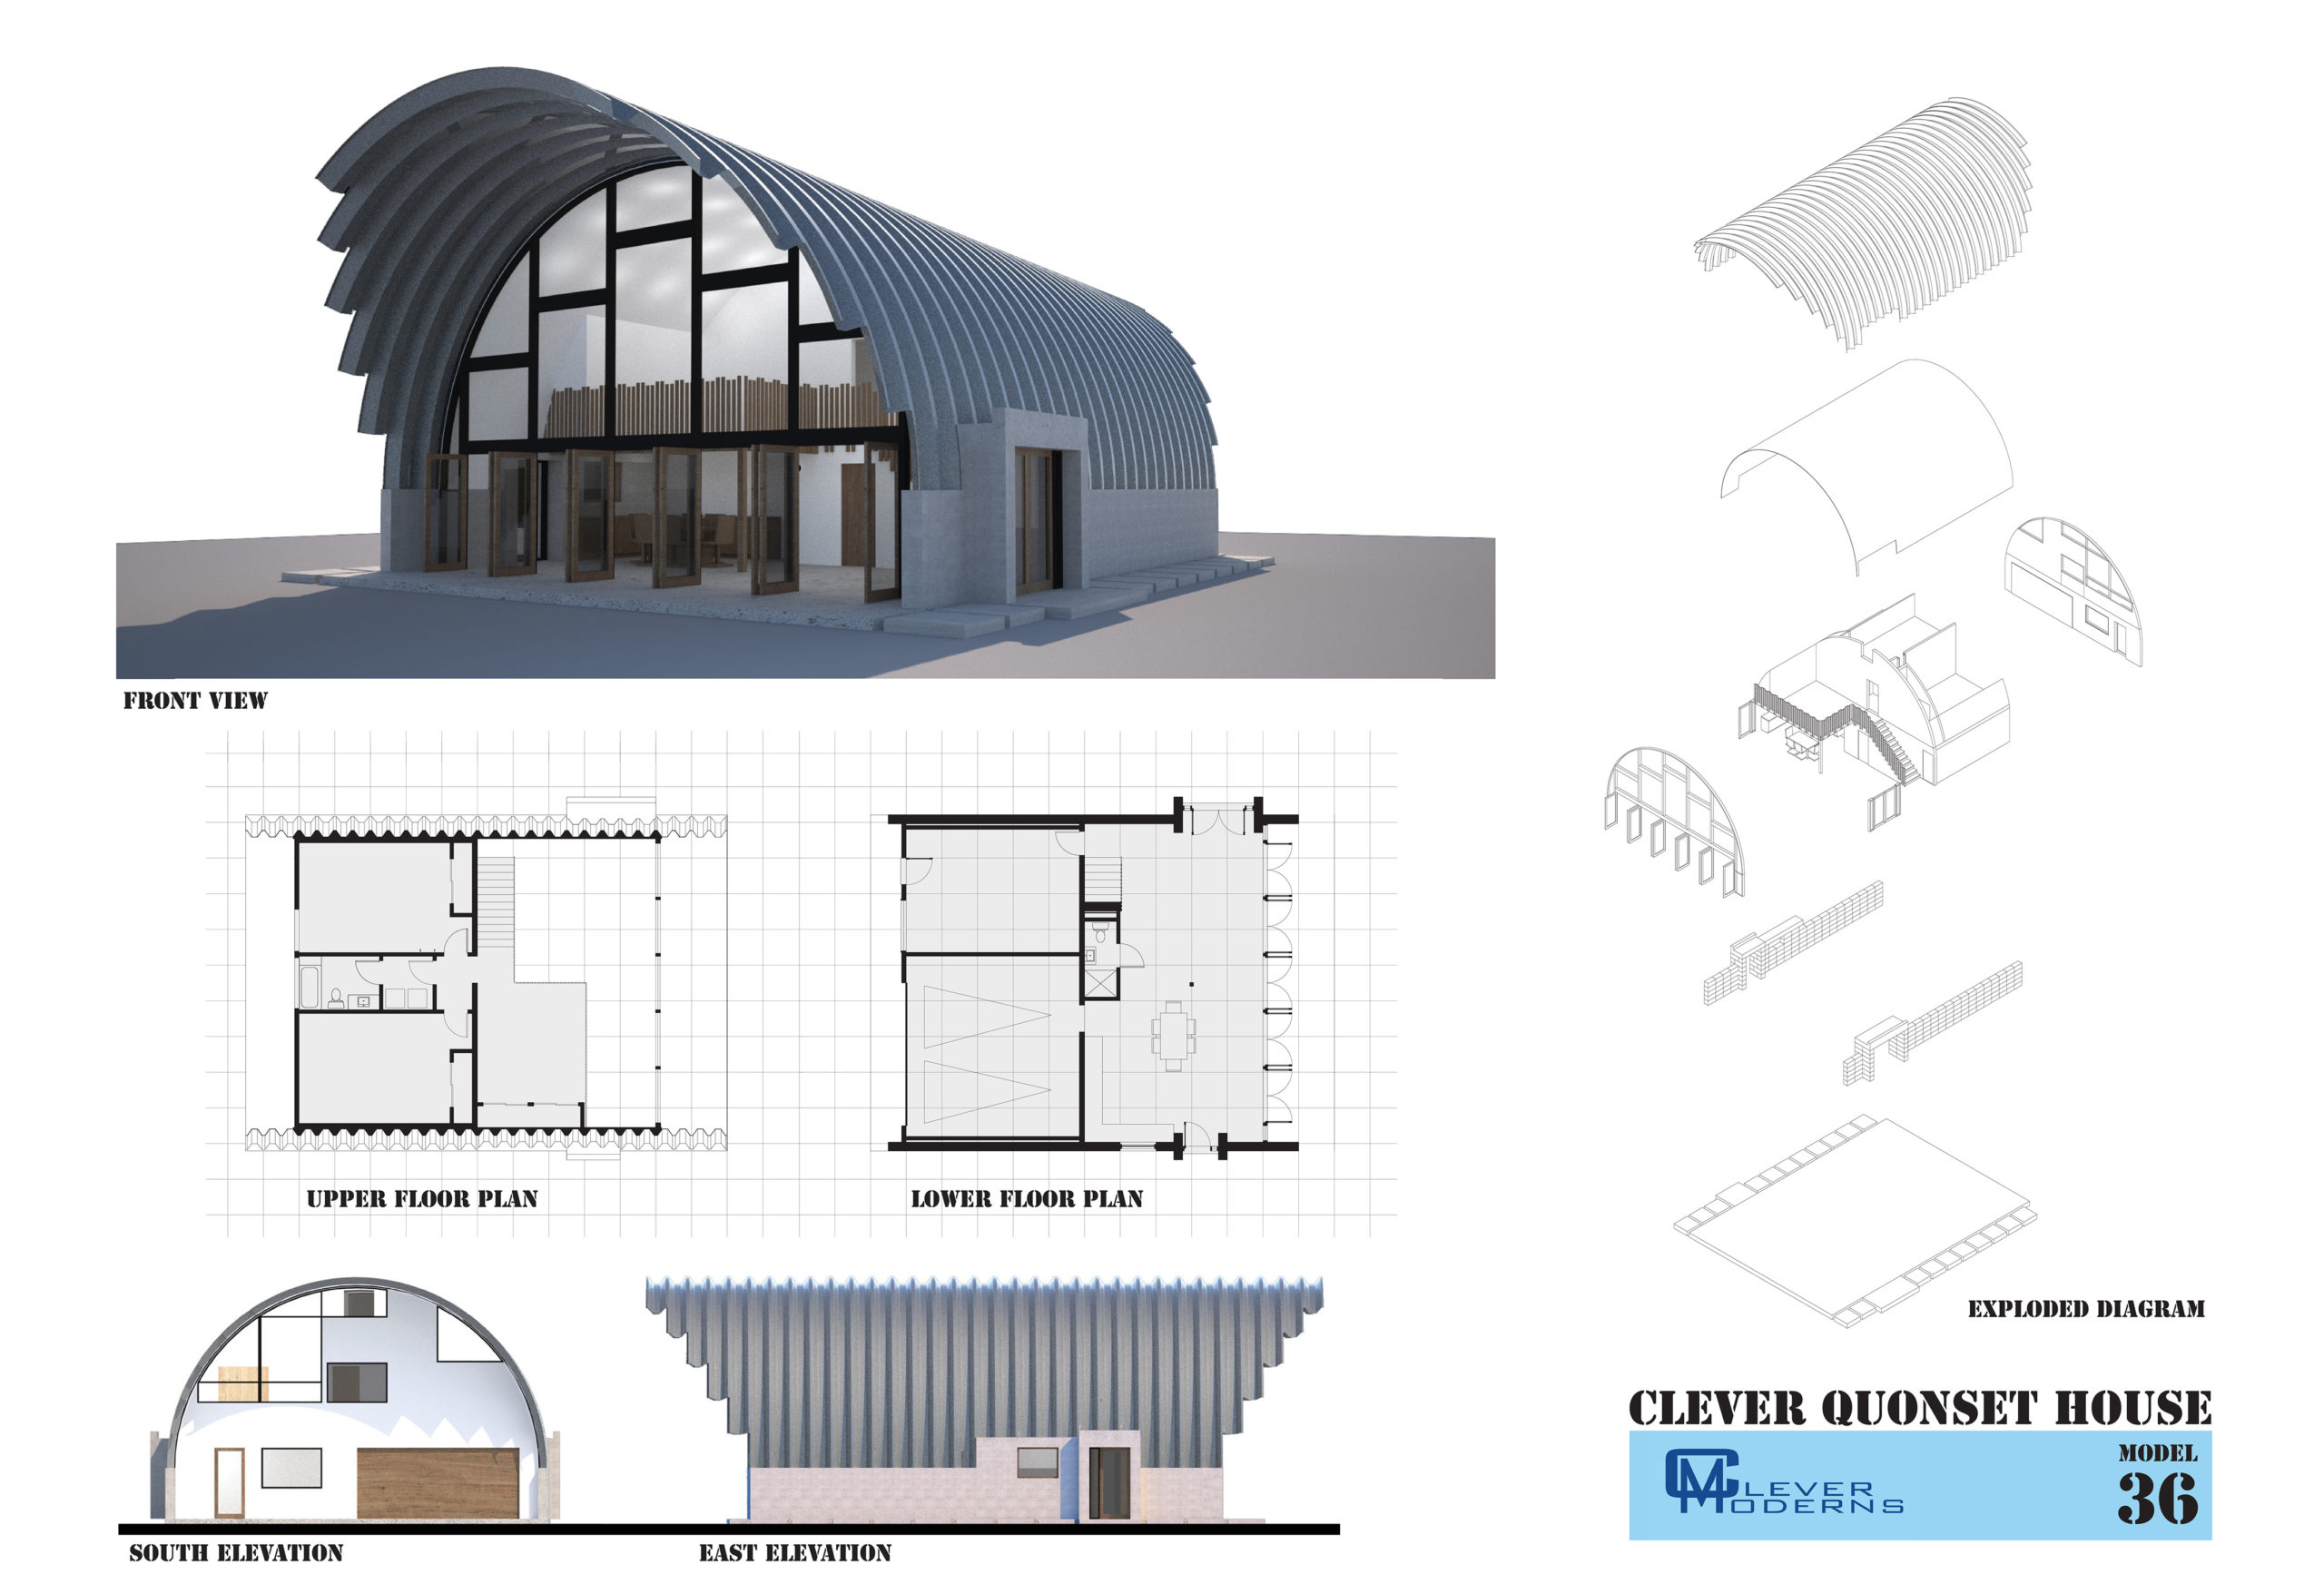 Clever Moderns Quonset Hut house design 1 | Clever Moderns